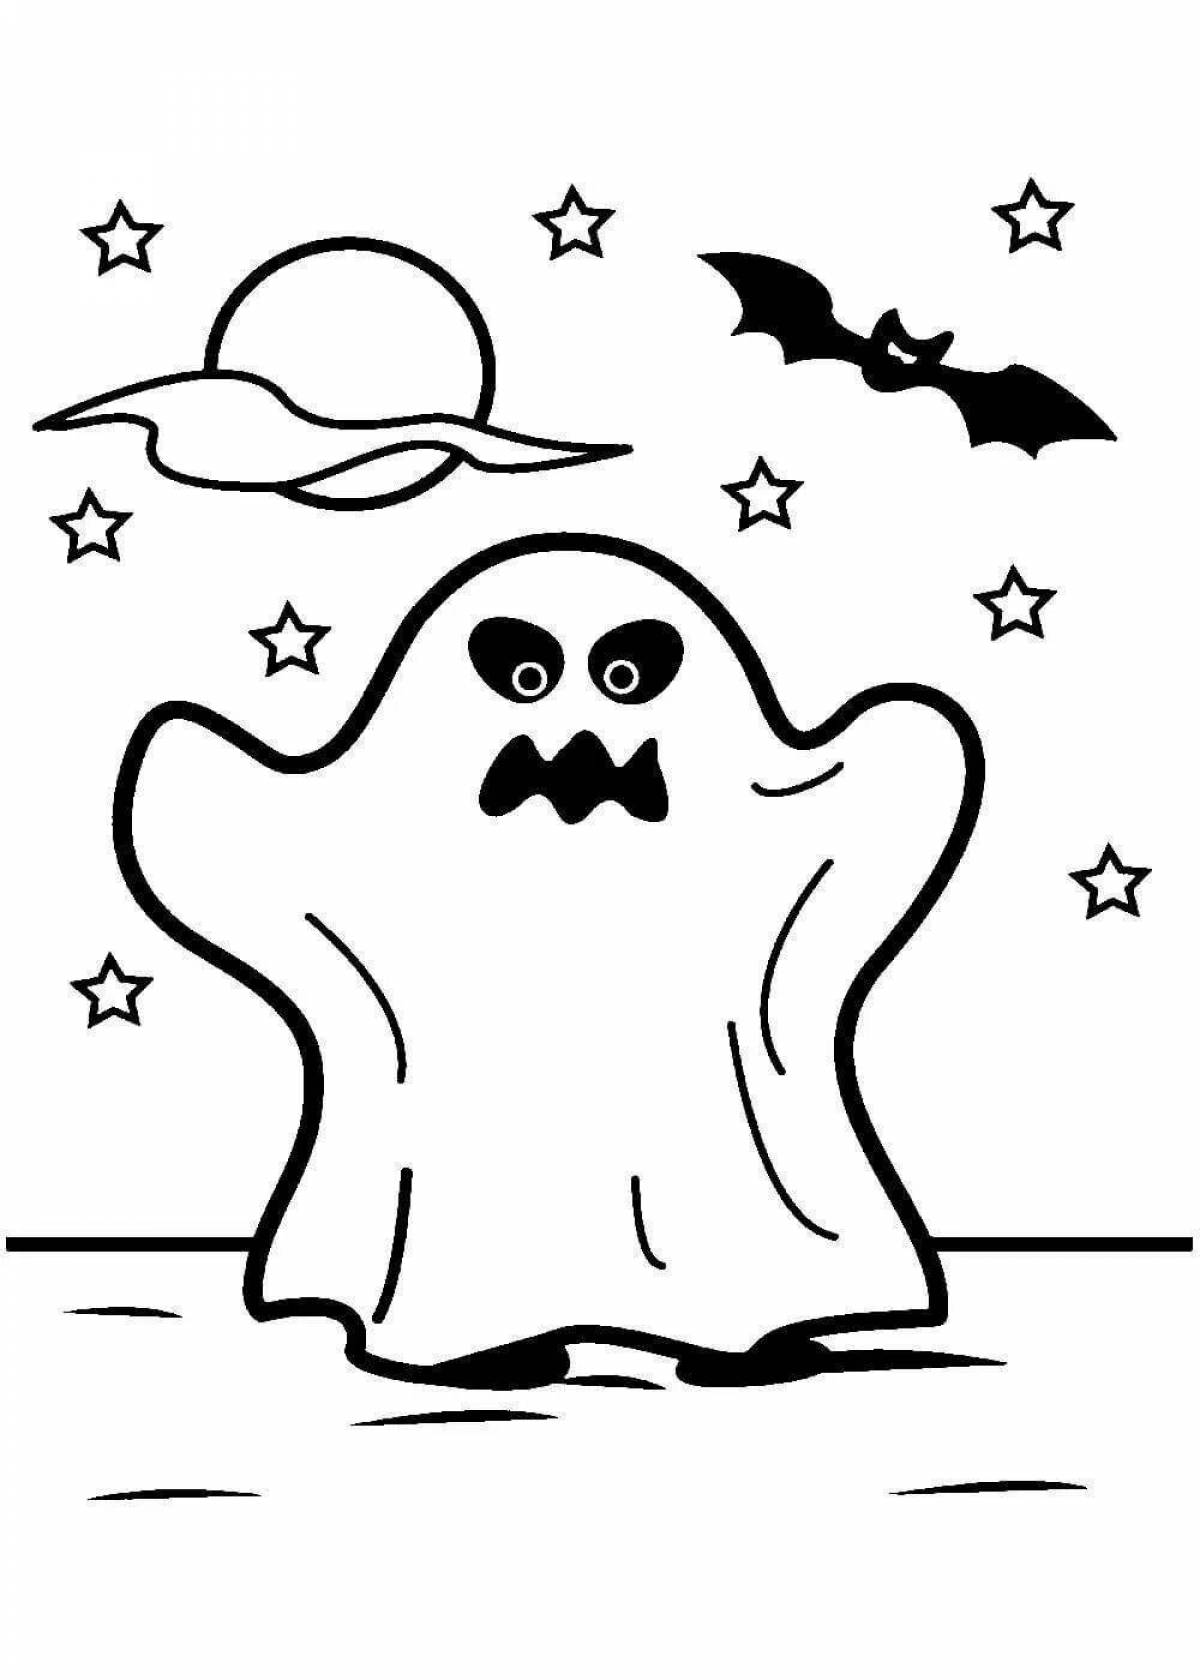 Supernatural ghost coloring book for kids